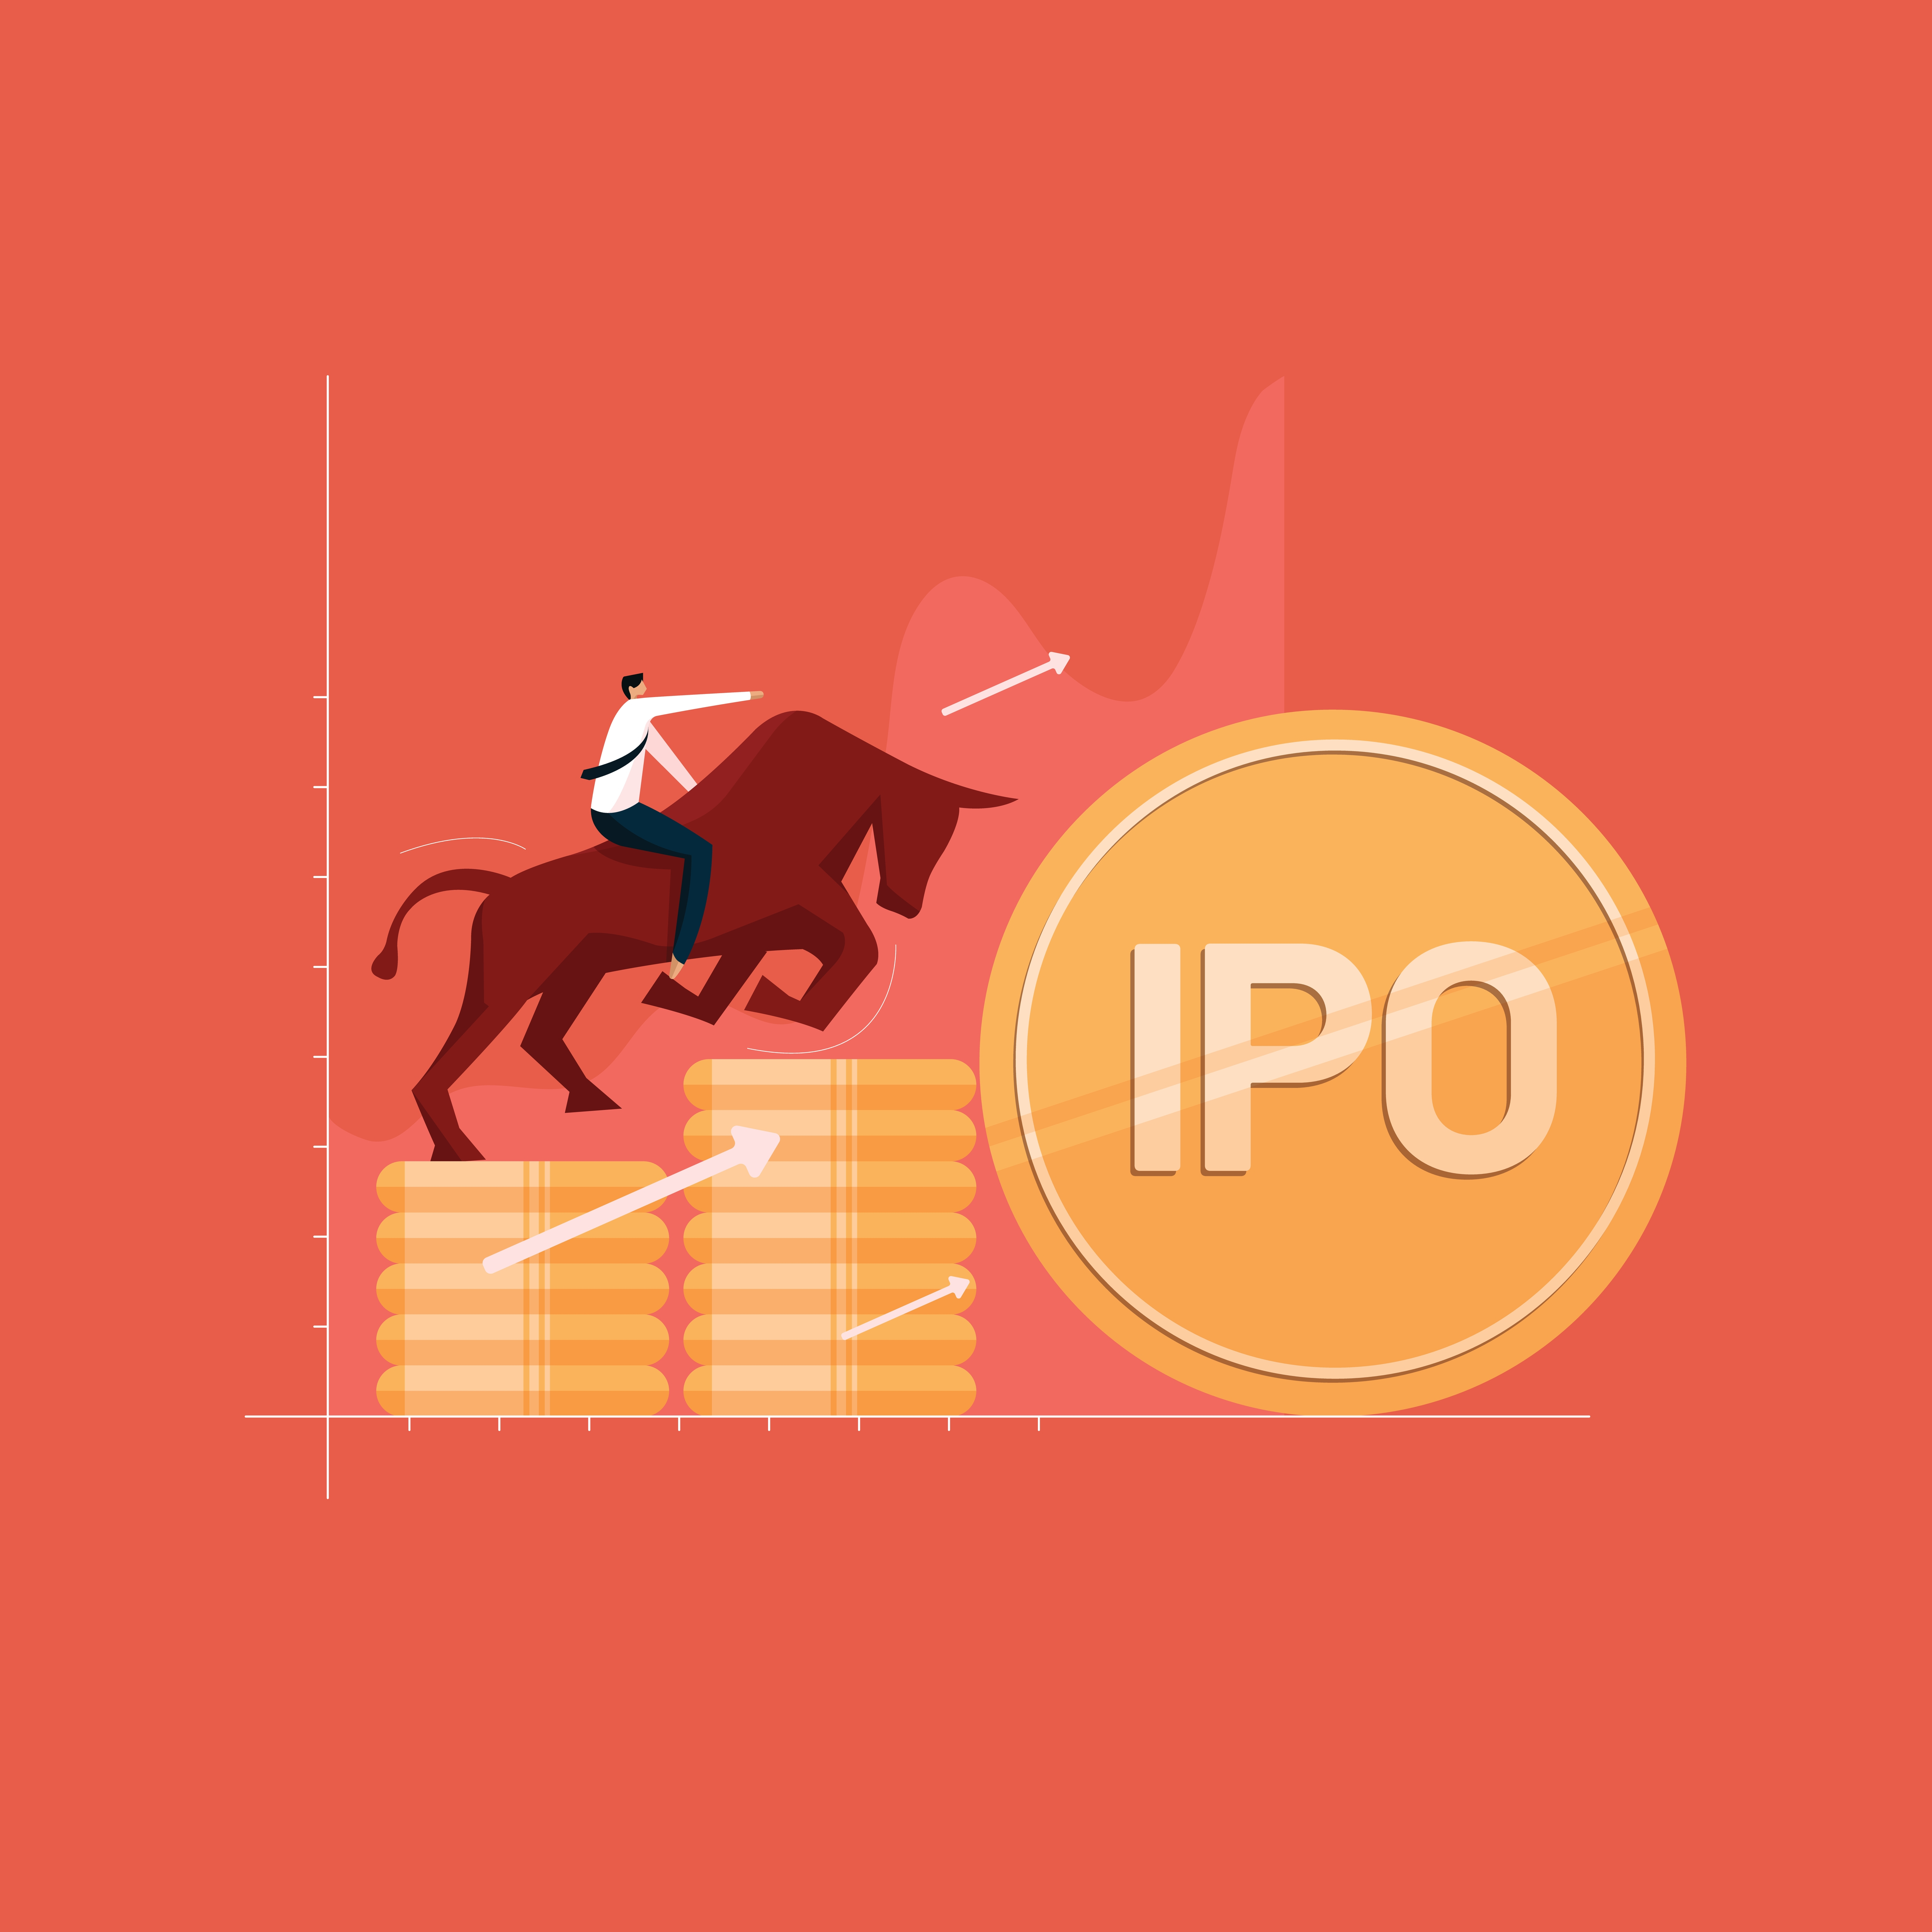 İnitial Public Offering (Halka Arz) IPO Nedir?